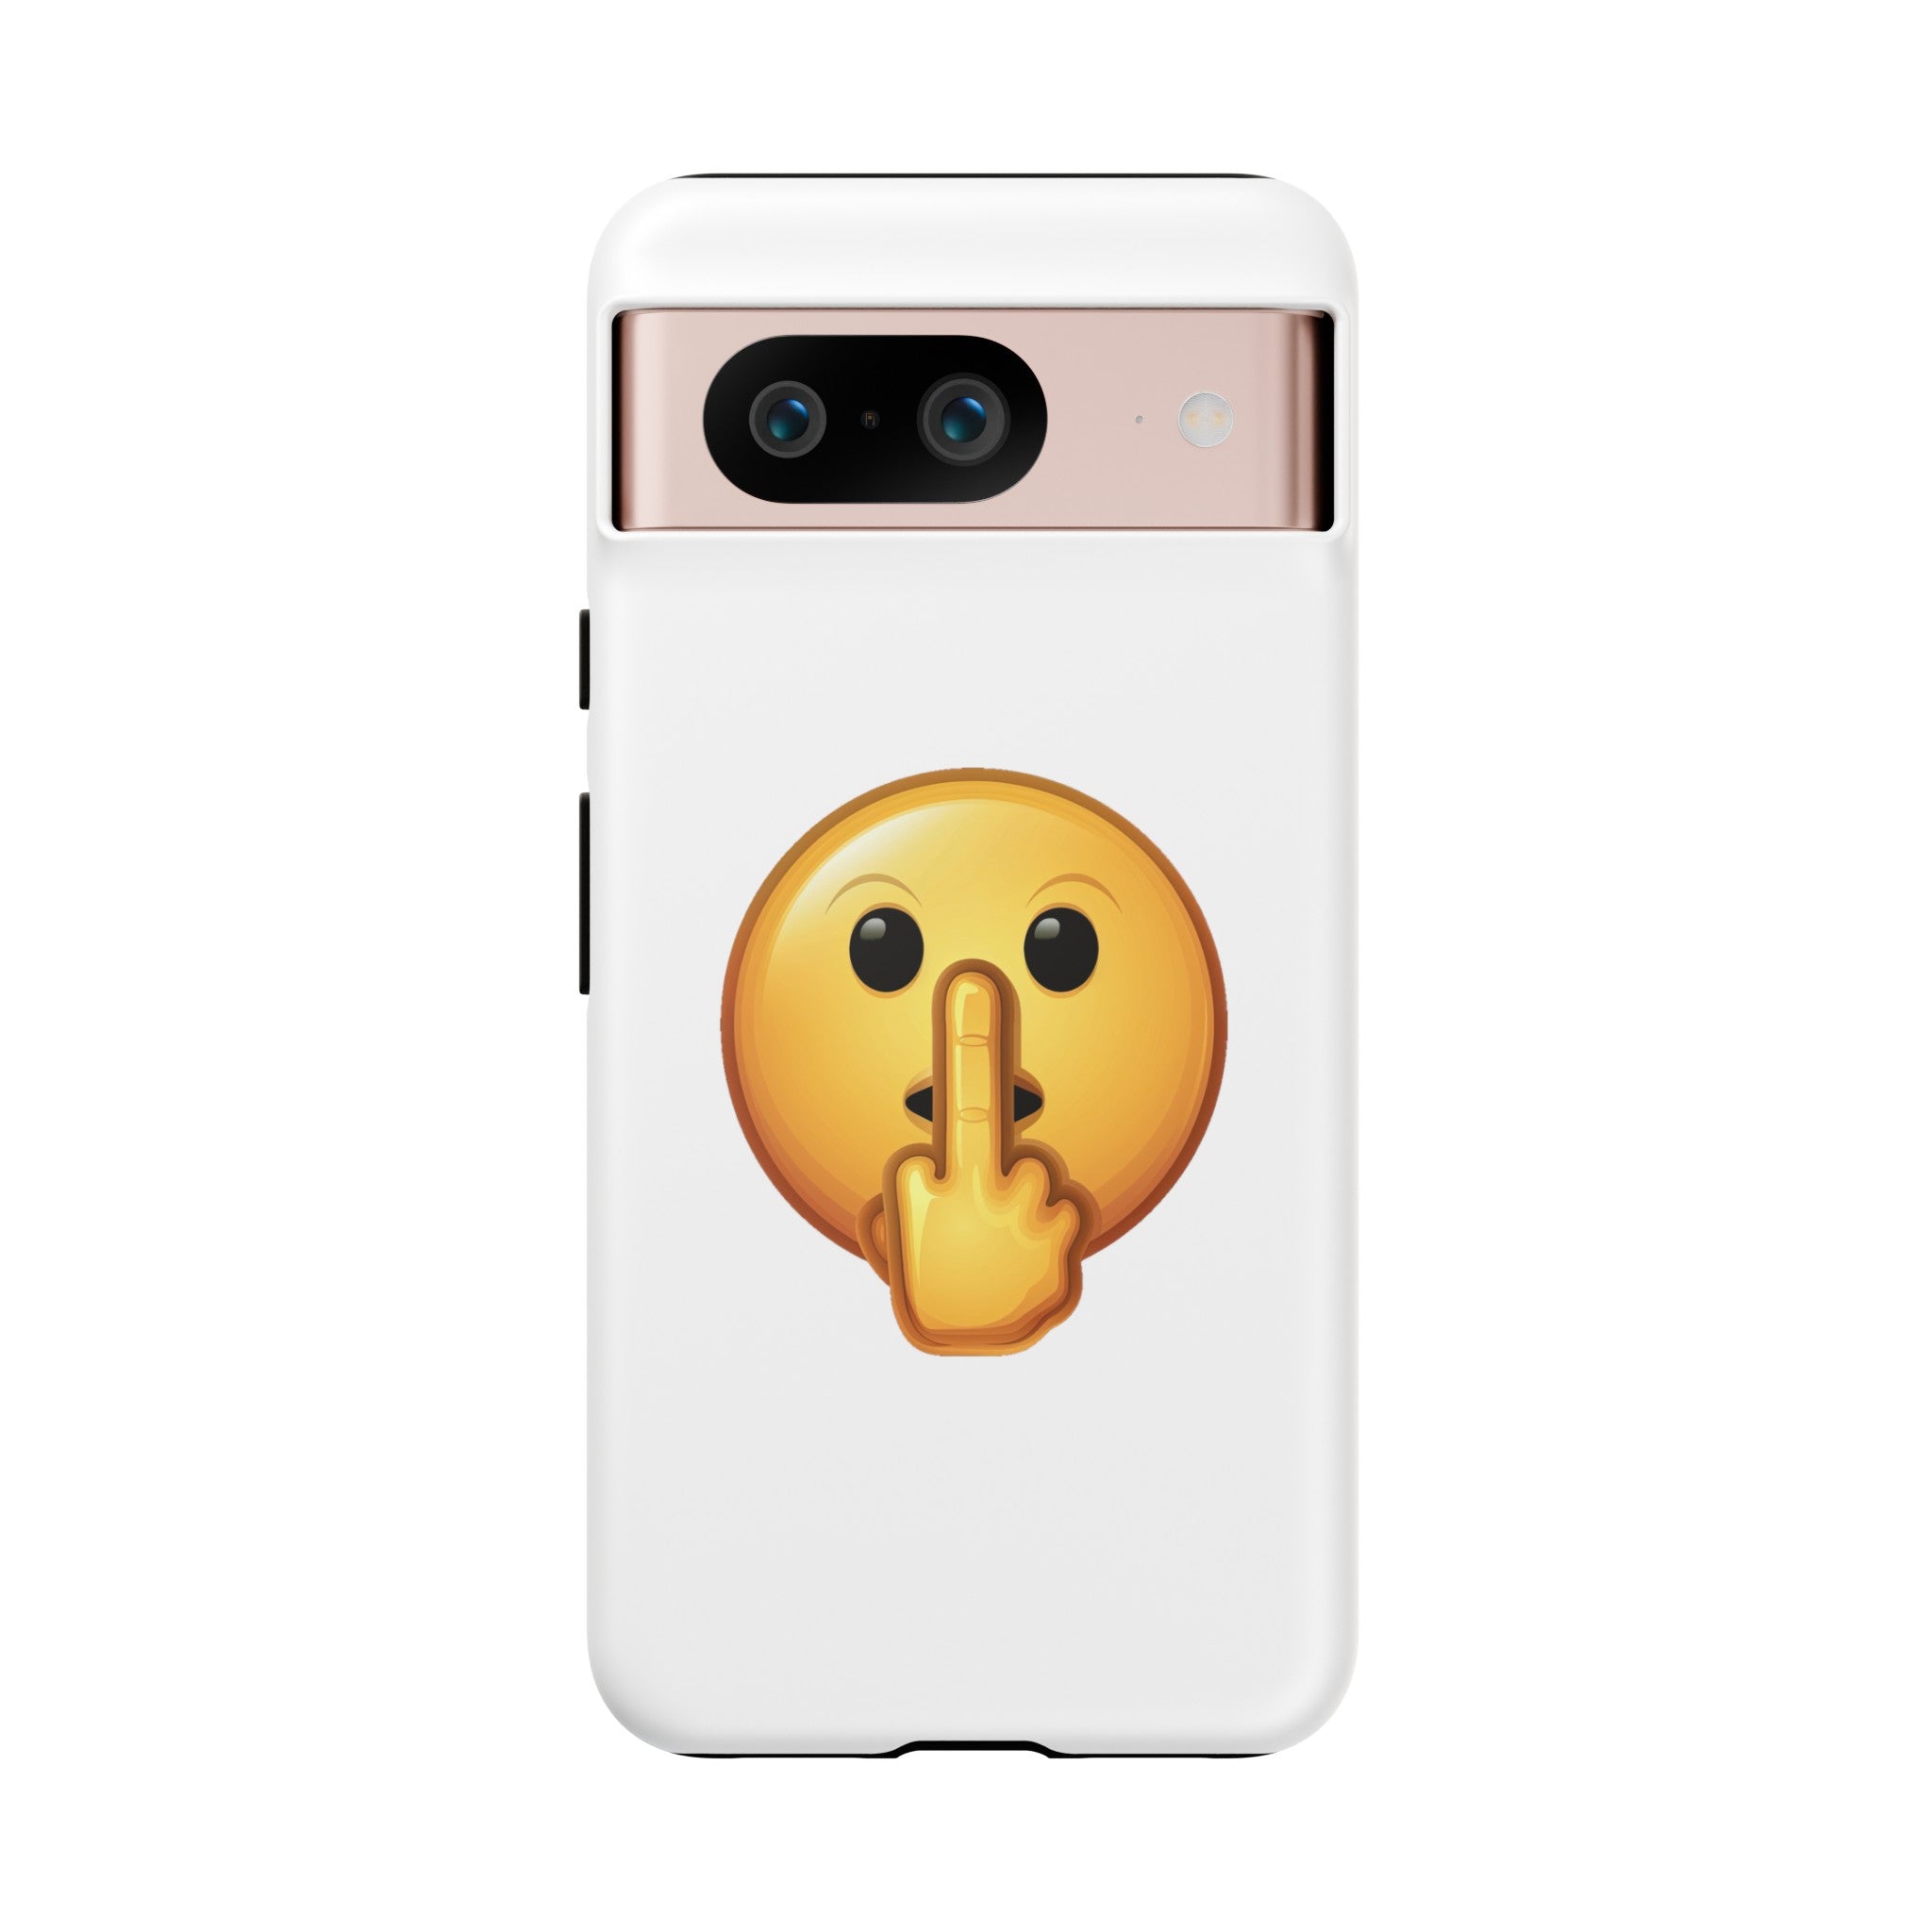 Middle Finger FU Shh Silent Protest Emoji Phone Tough Cases